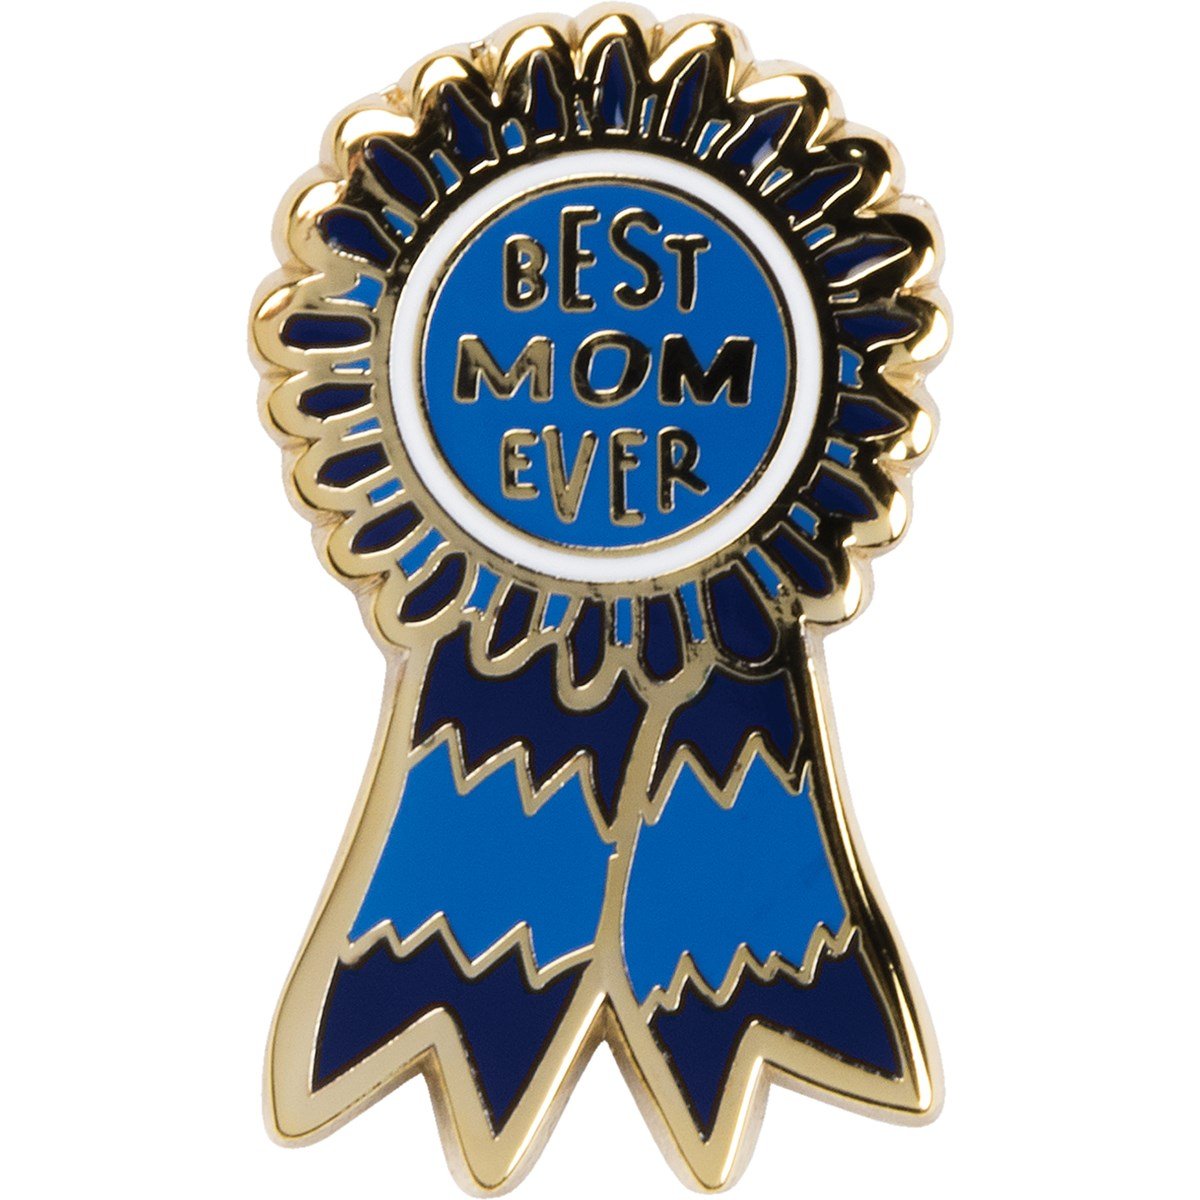 Best Mom Ever Blue Ribbon Enamel Pin on Gift Card